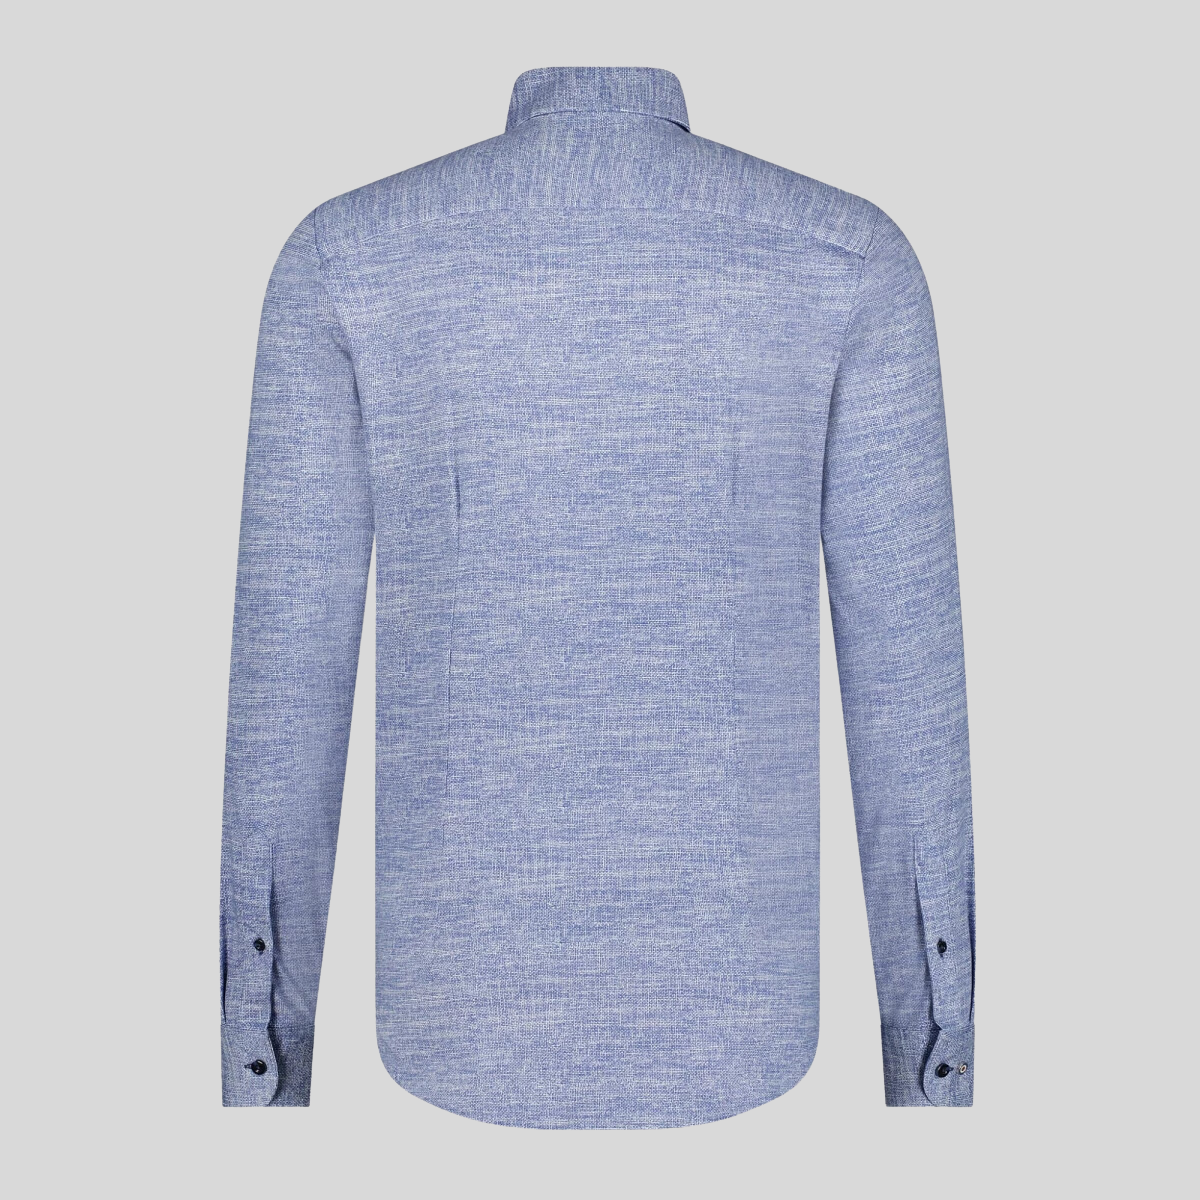 Gotstyle Fashion - Blue Industry Collar Shirts Crosshatch Weave Jersey Shirt - Denim